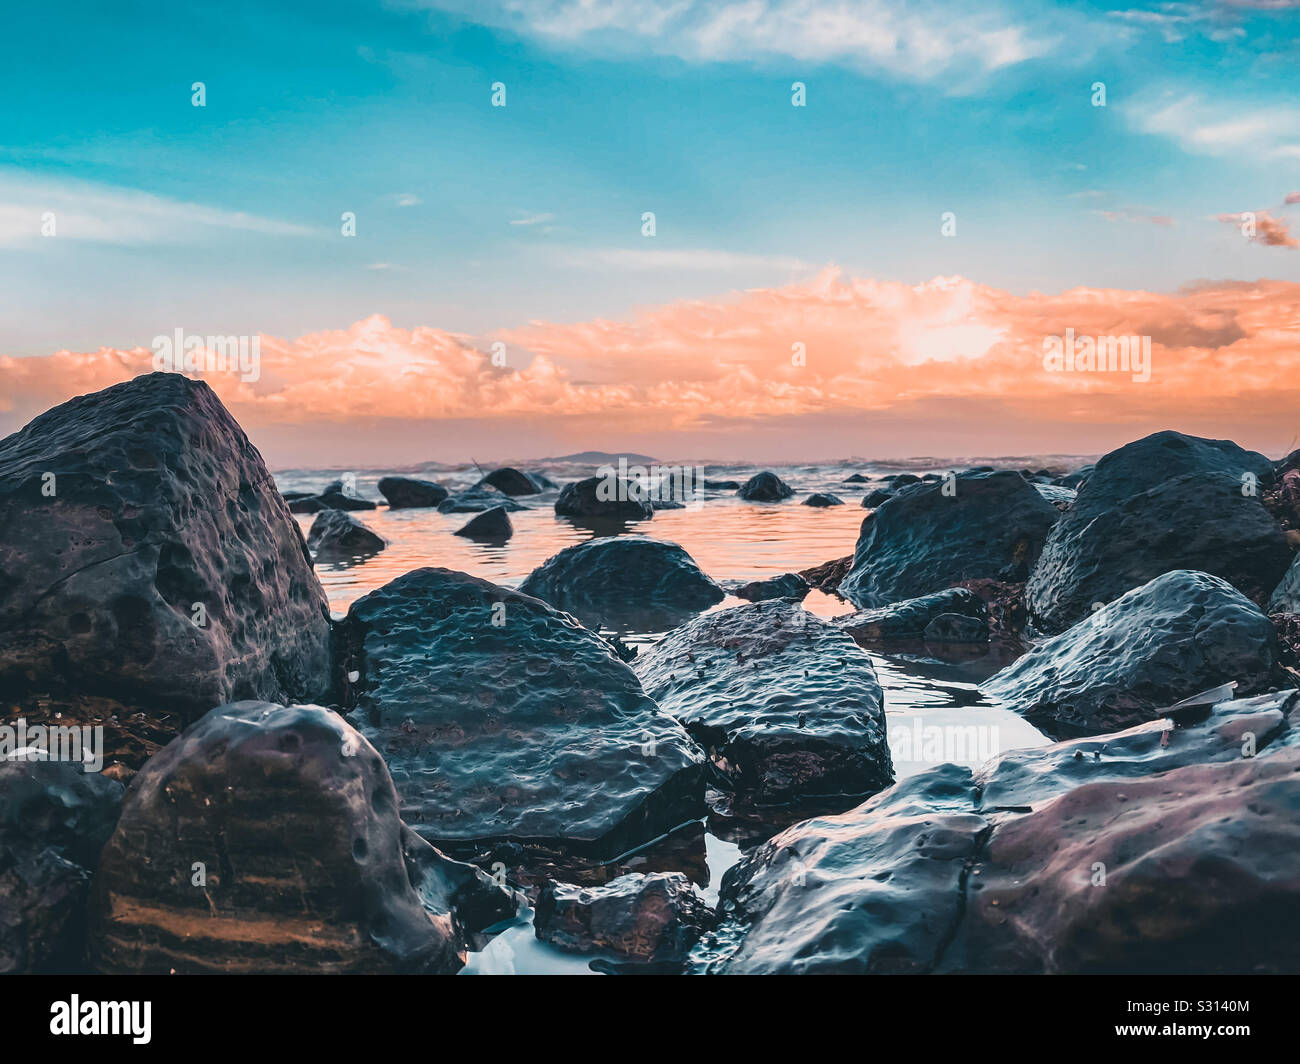 Schönen Sonnenuntergang mit Stein bei Pantai Batu Hitam, Malaysia Stockfoto